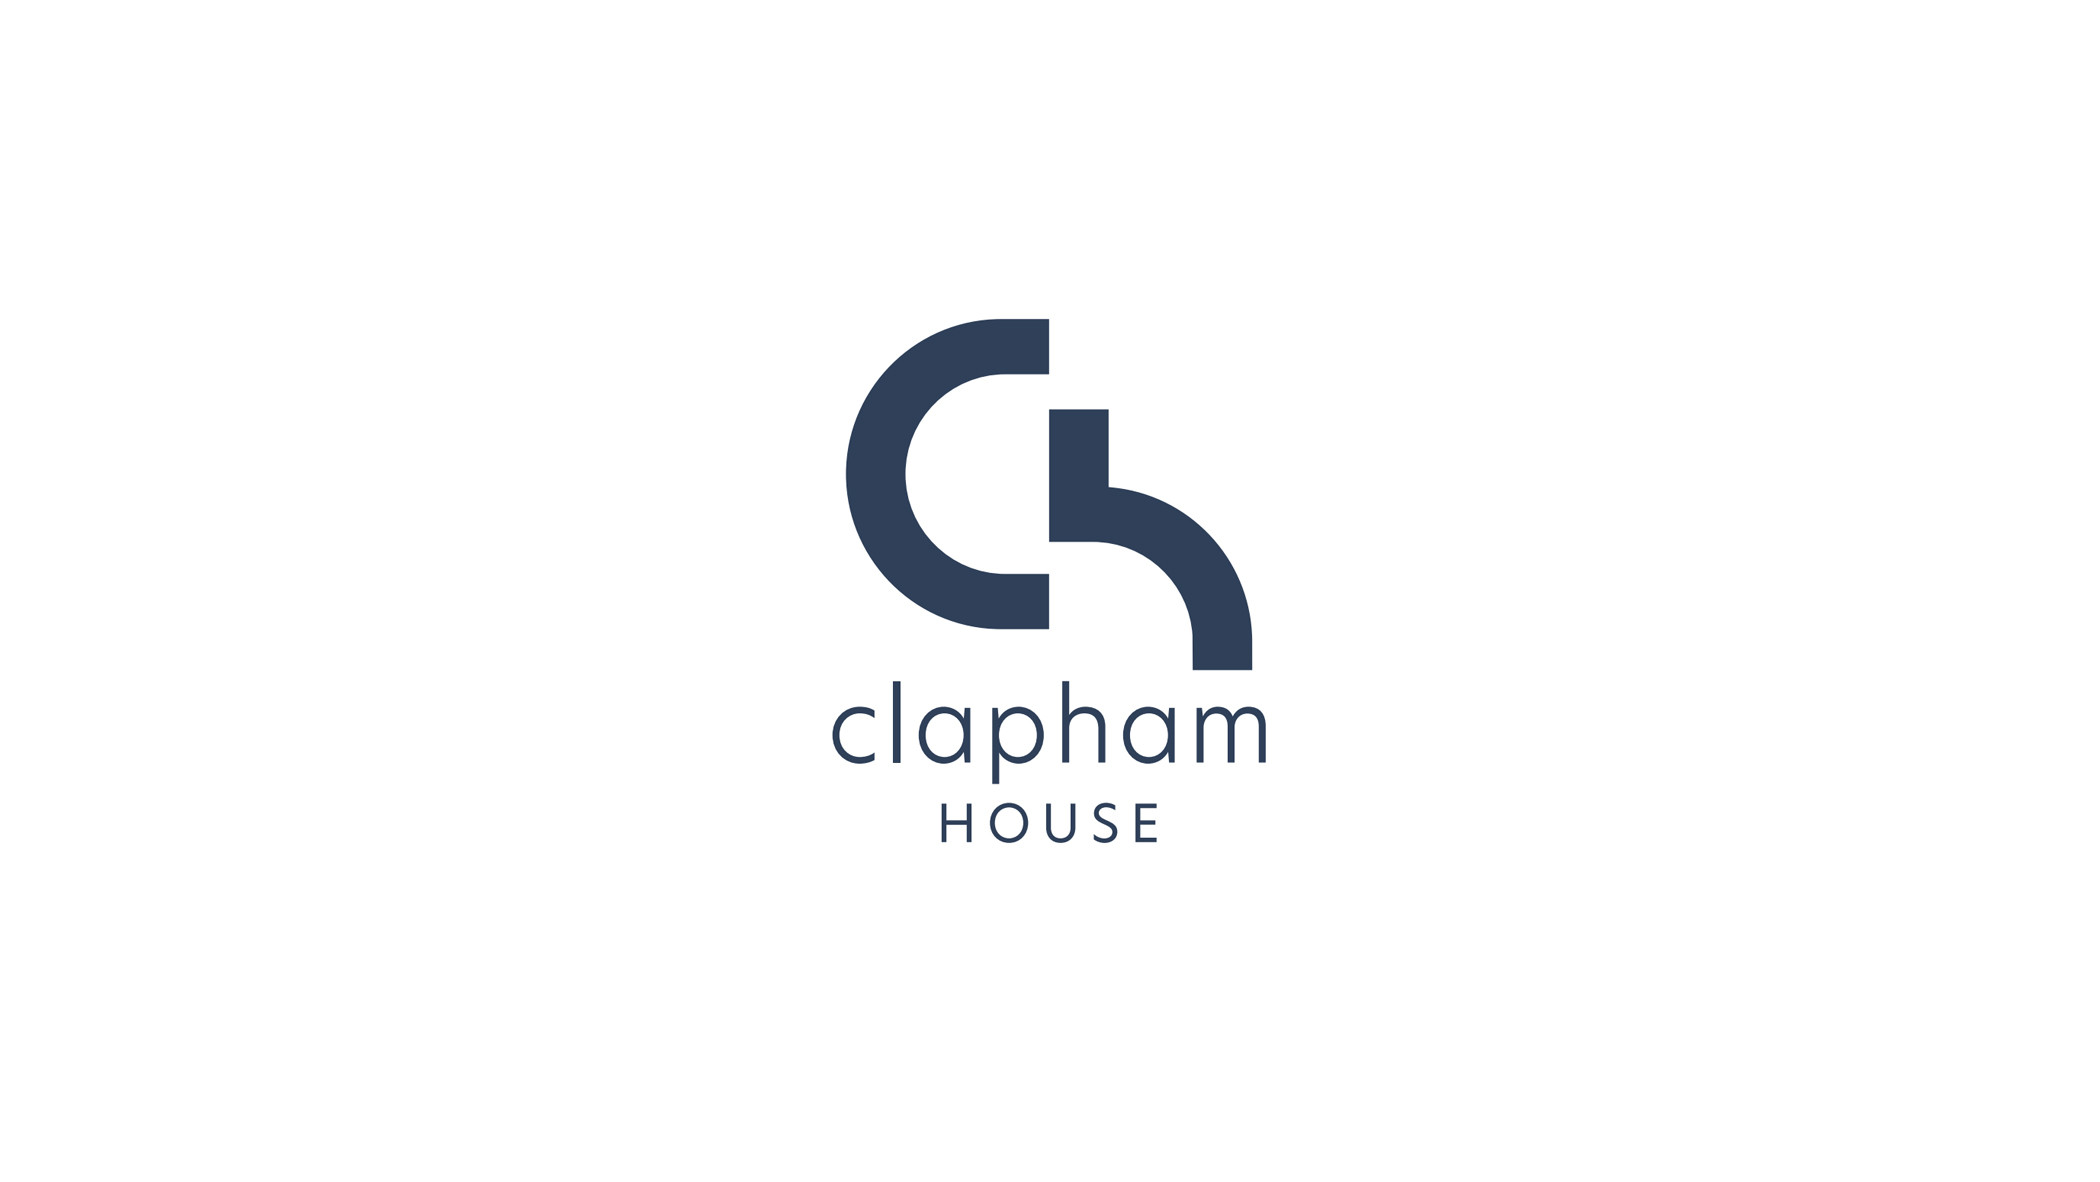 Clapham House development logo